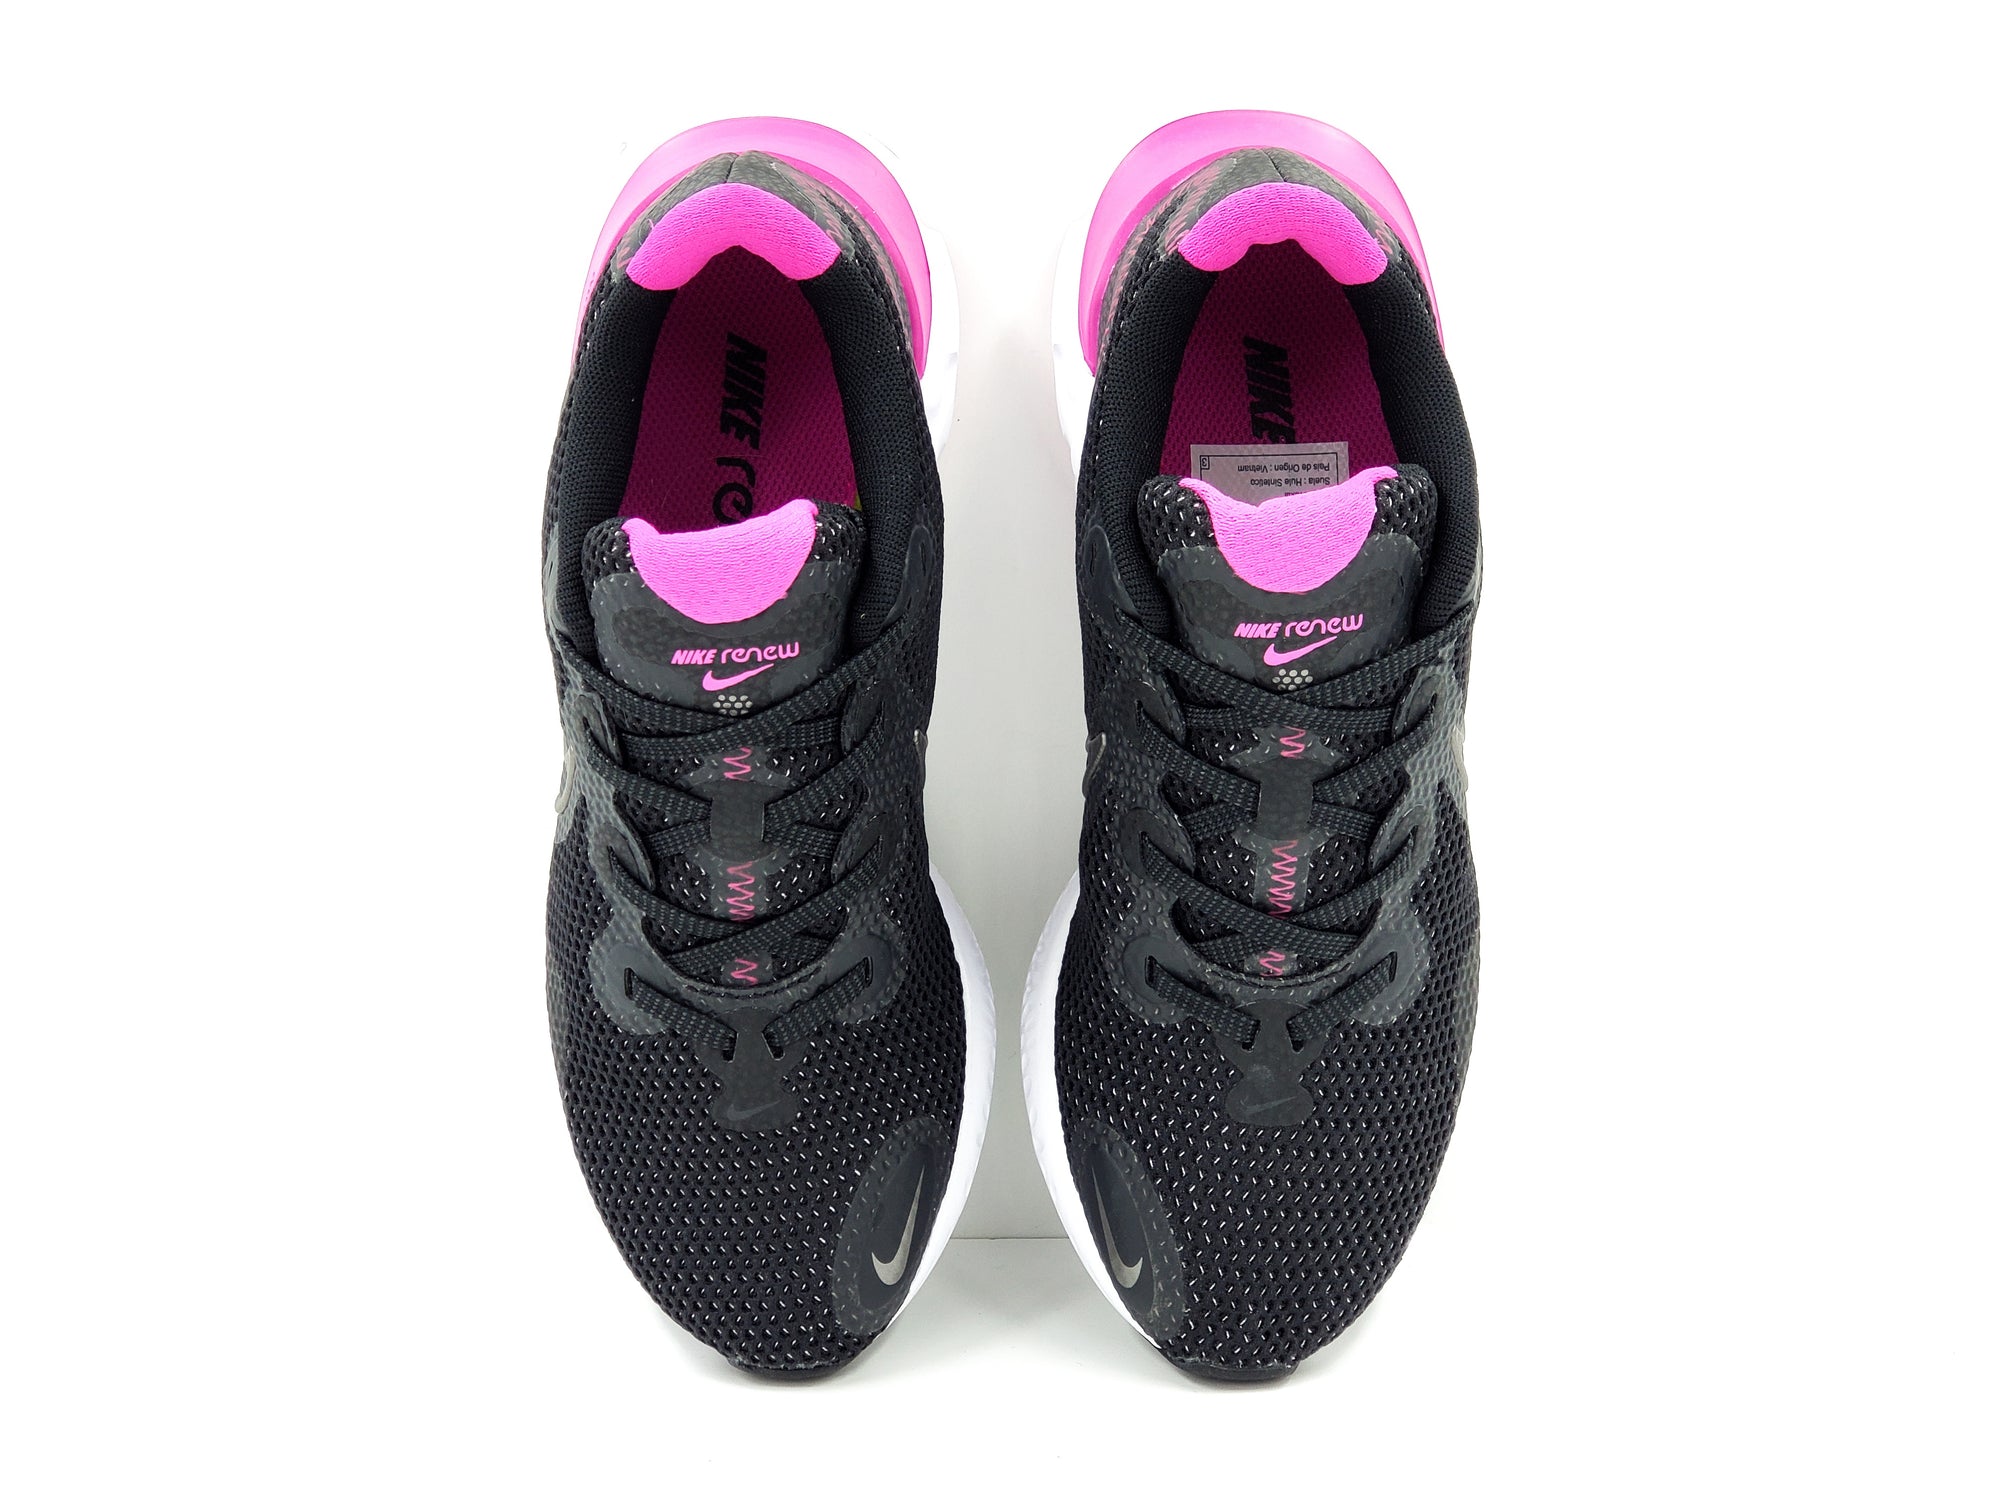 Tenis Nike Renew Run CK6360004 Negro/Rosa-Mujer - Tenis Sport MX